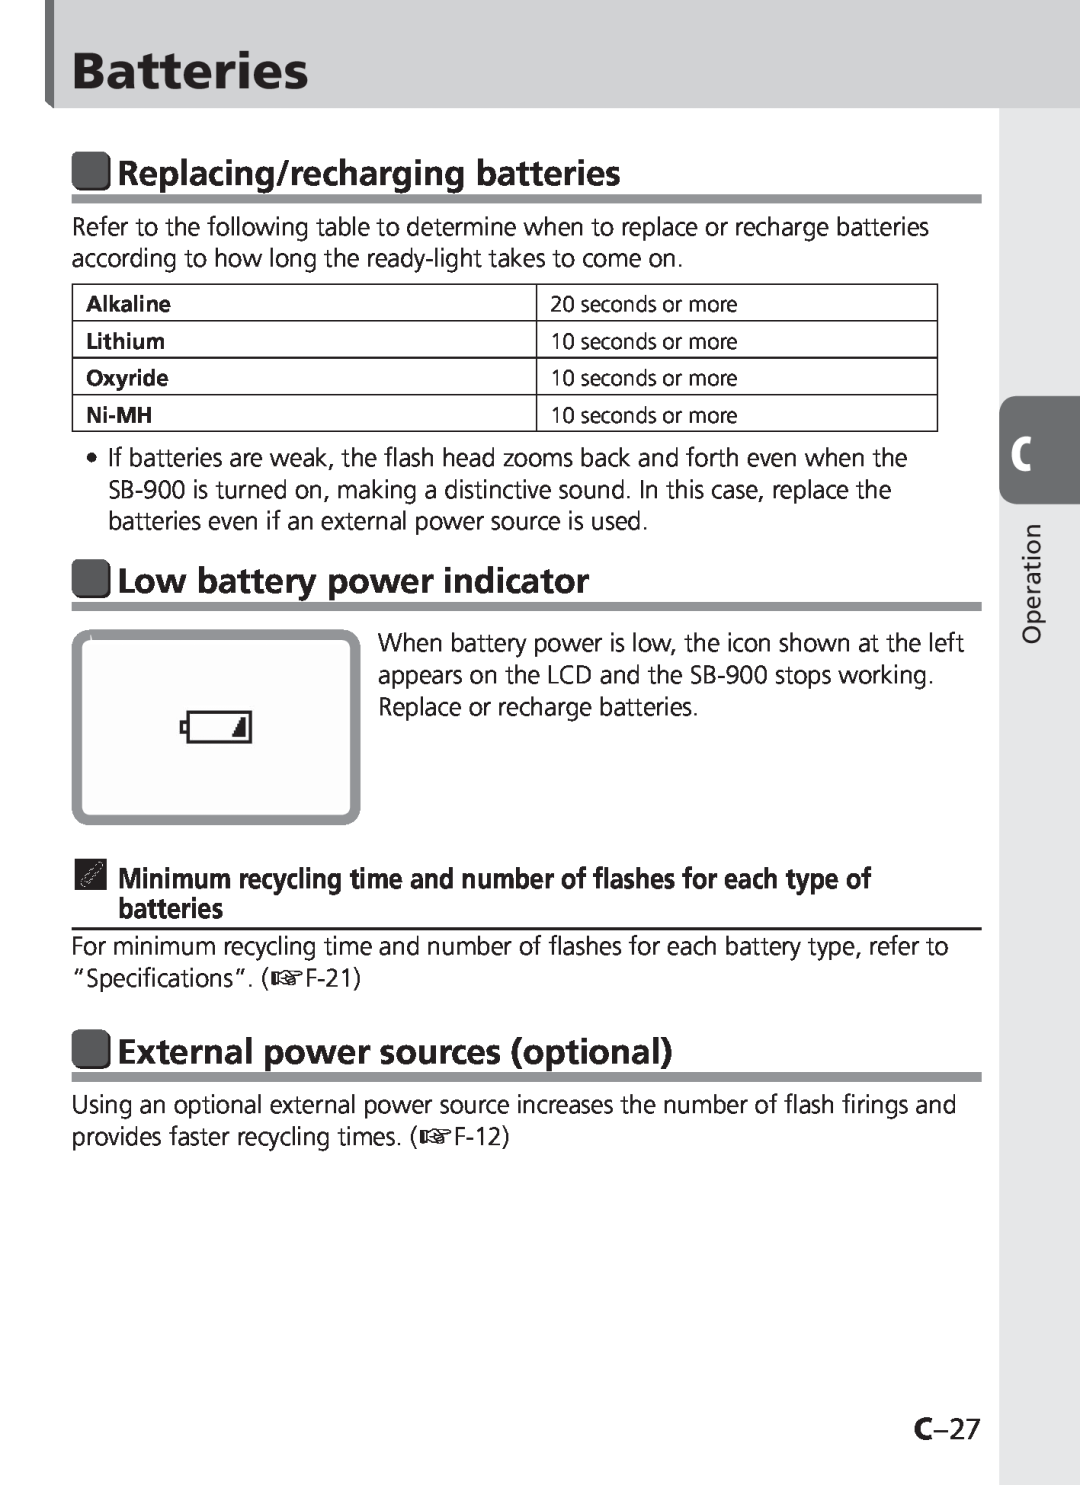 Univex SB-900 Batteries, Replacing/recharging batteries, Low battery power indicator, External power sources optional 